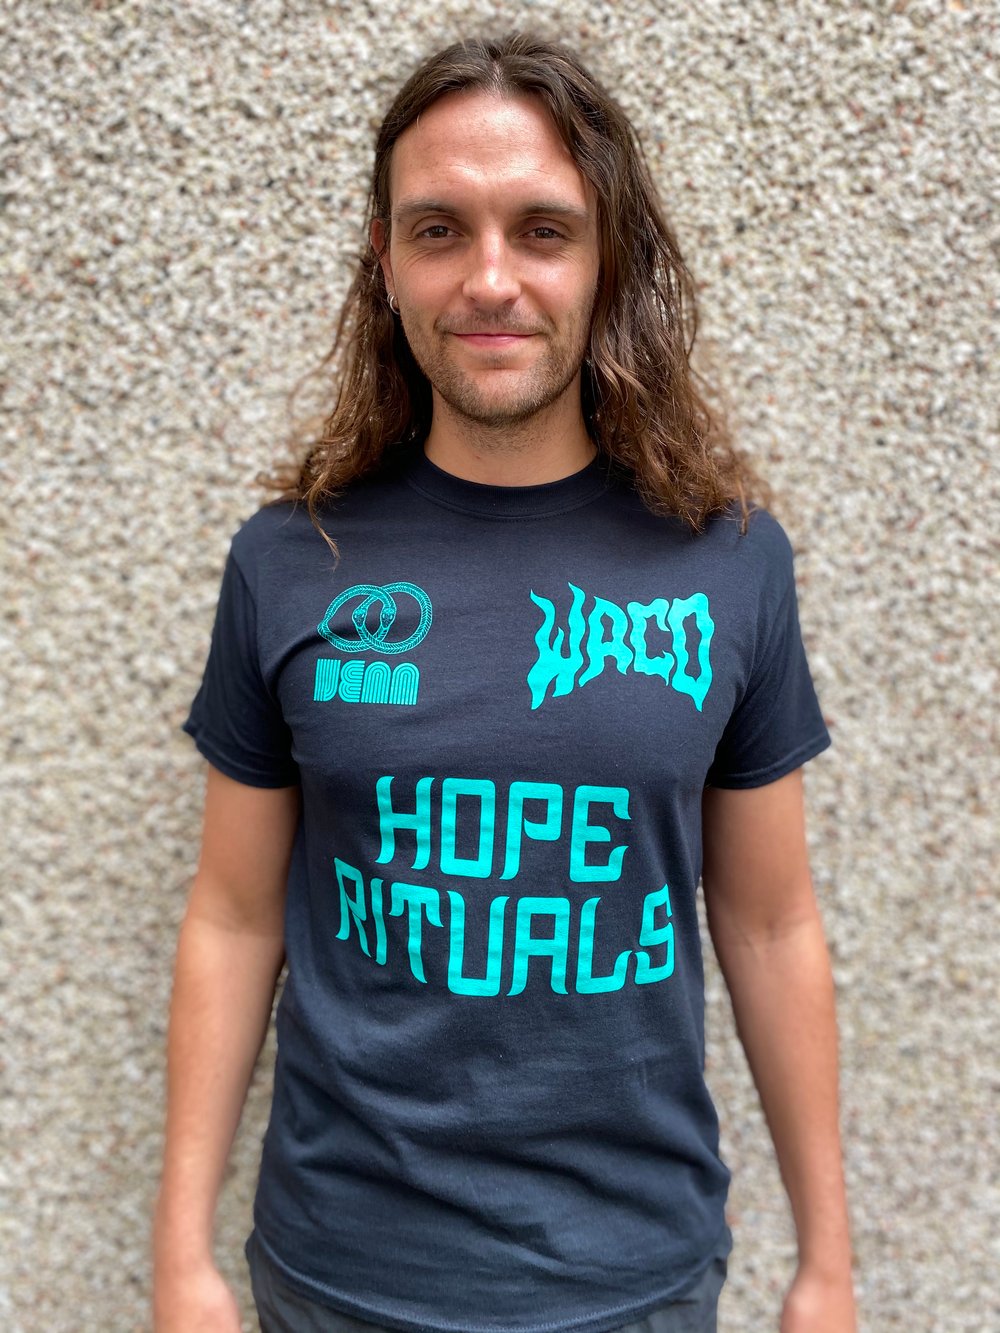 "Hope Rituals" Footy Home Shirt 